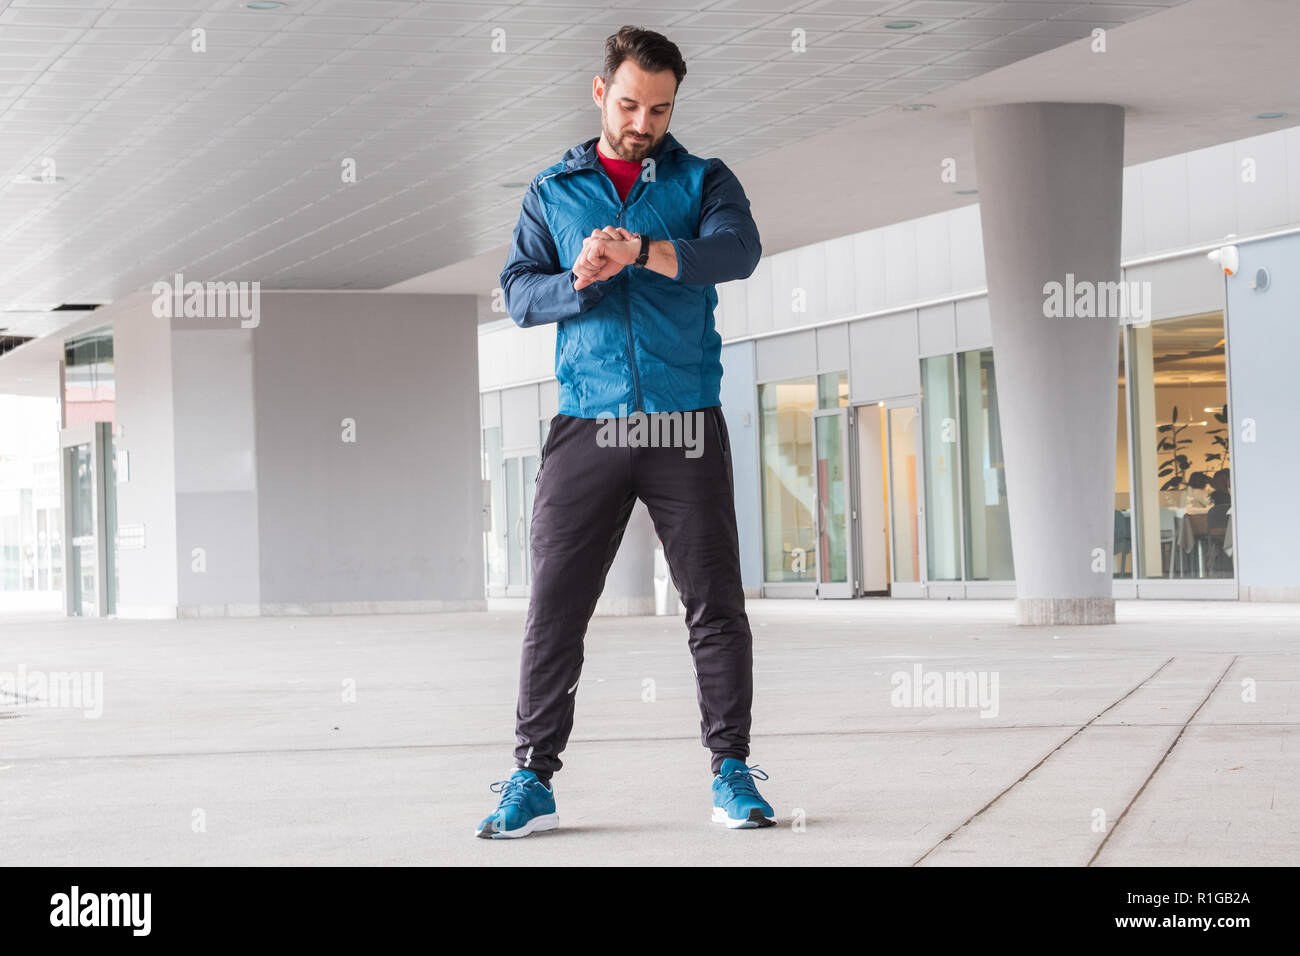 Active man portrait using smartwatch fitness app Stock Photo